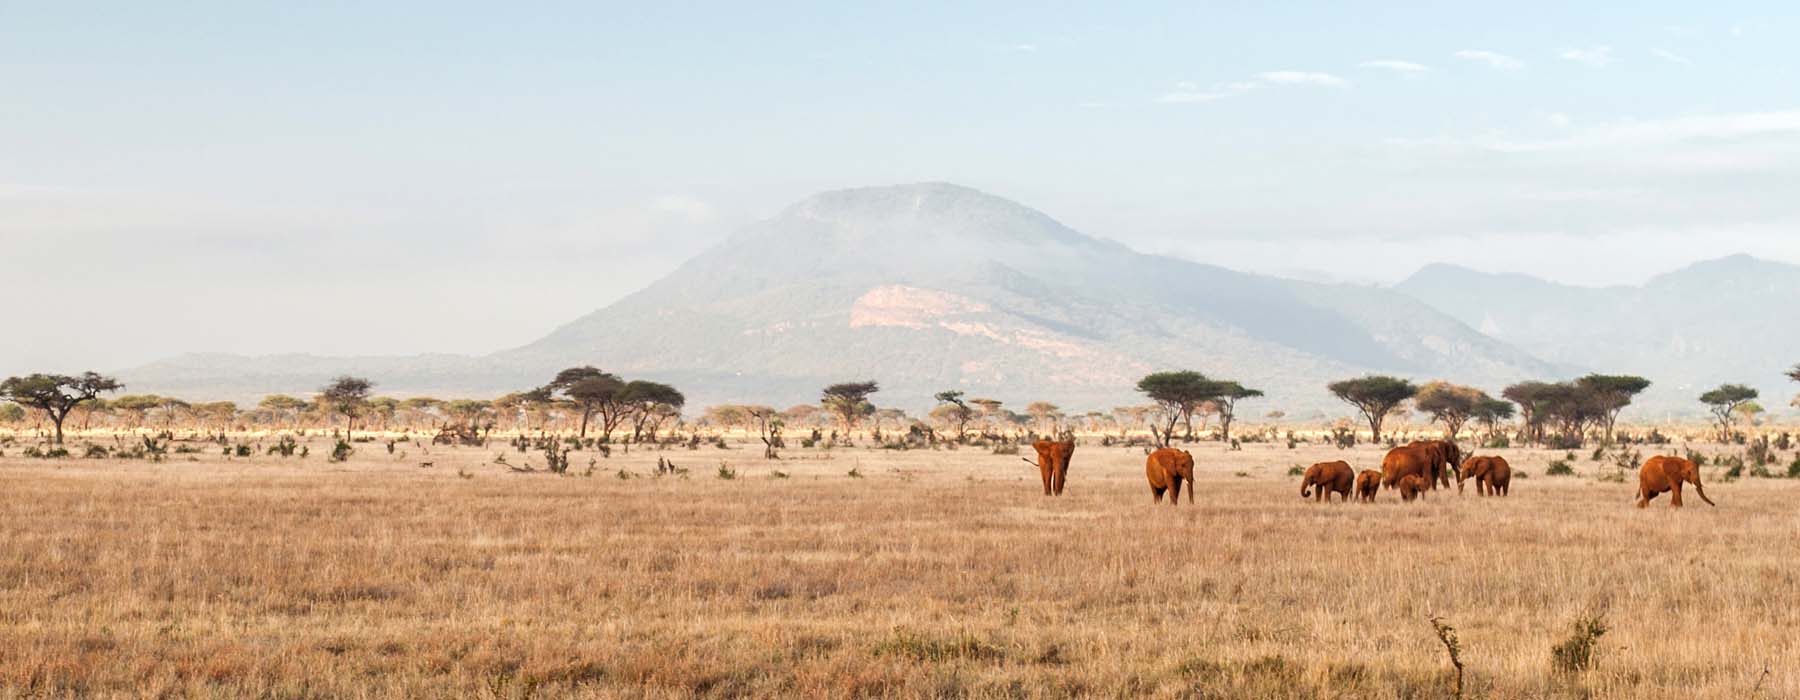 L'Esprit Voyageurs Kenya